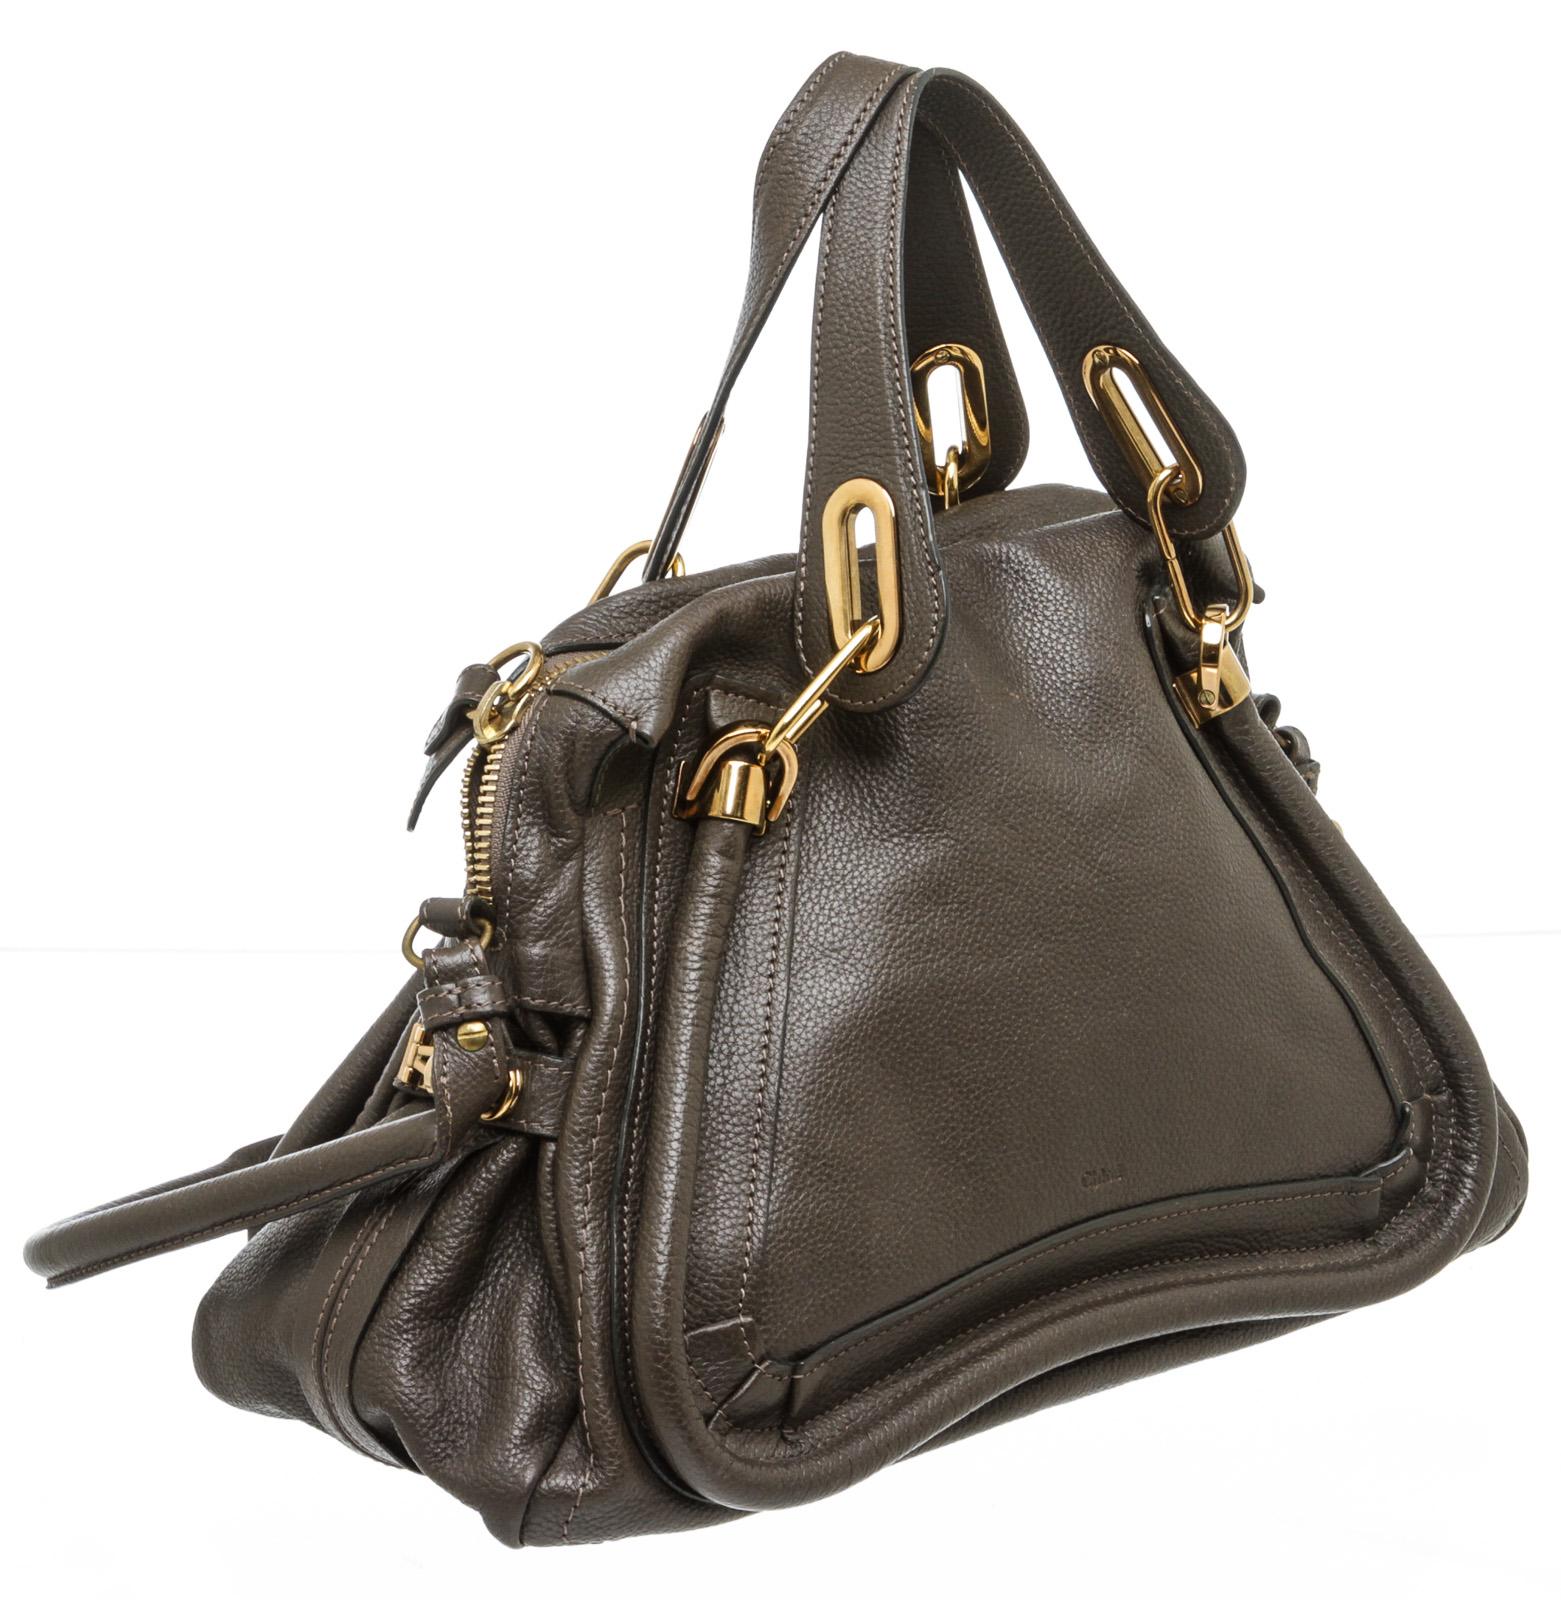 Chloe Brown Leather Paraty Medium Satchel Handbag 3